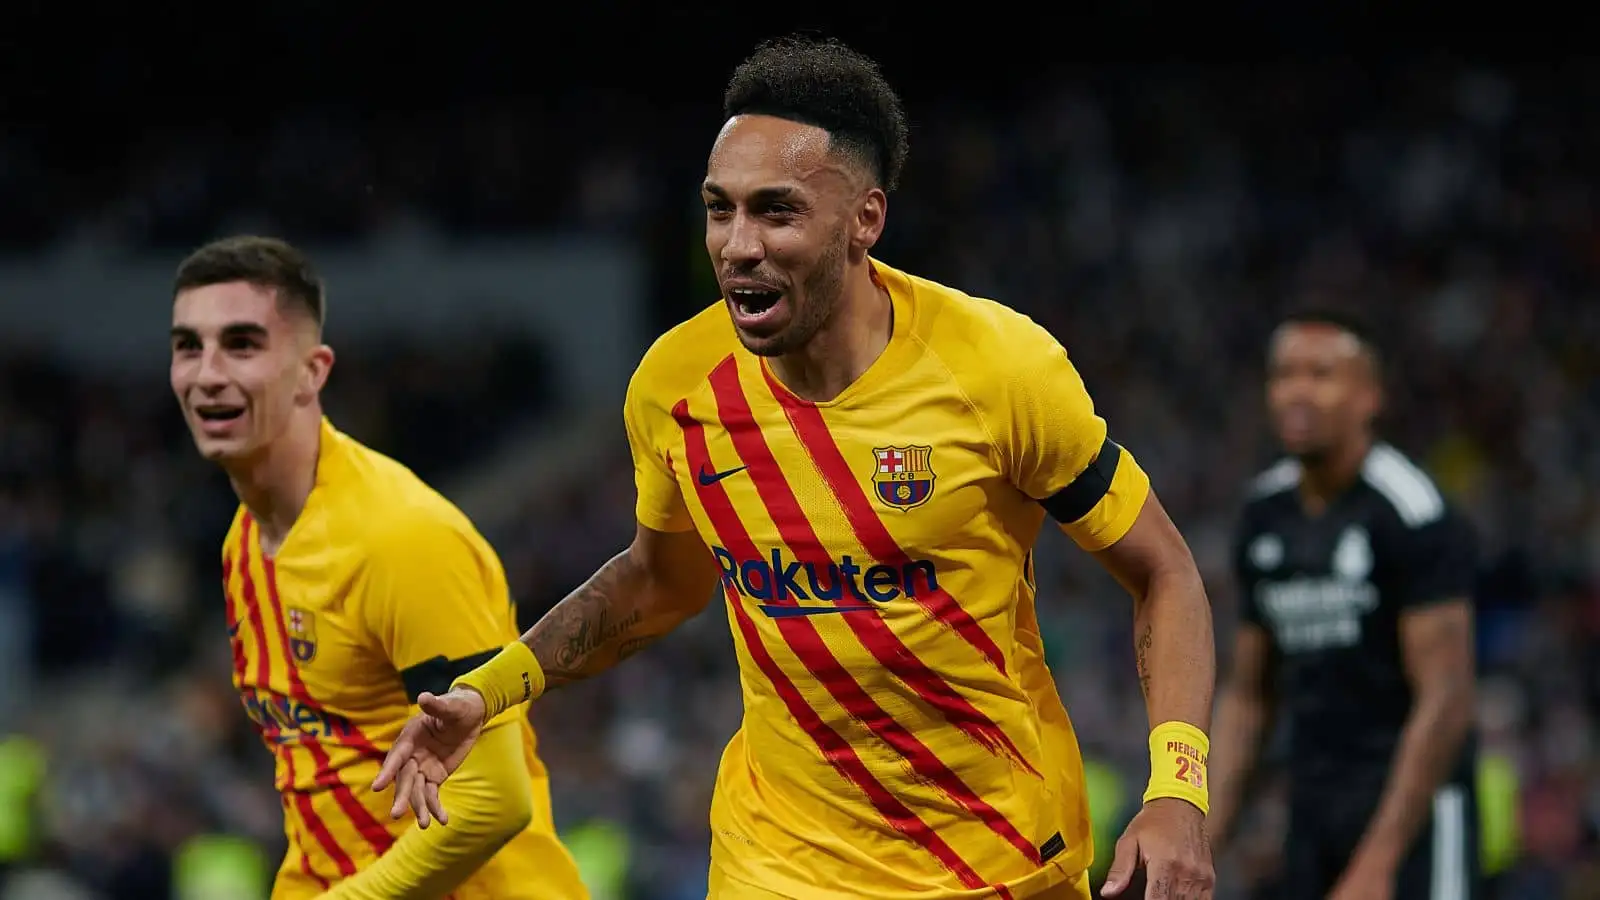 Pierre-Emerick Aubameyang Barcelona celeb during El Clasico as Barcelona win 4-0 against Real Madrid